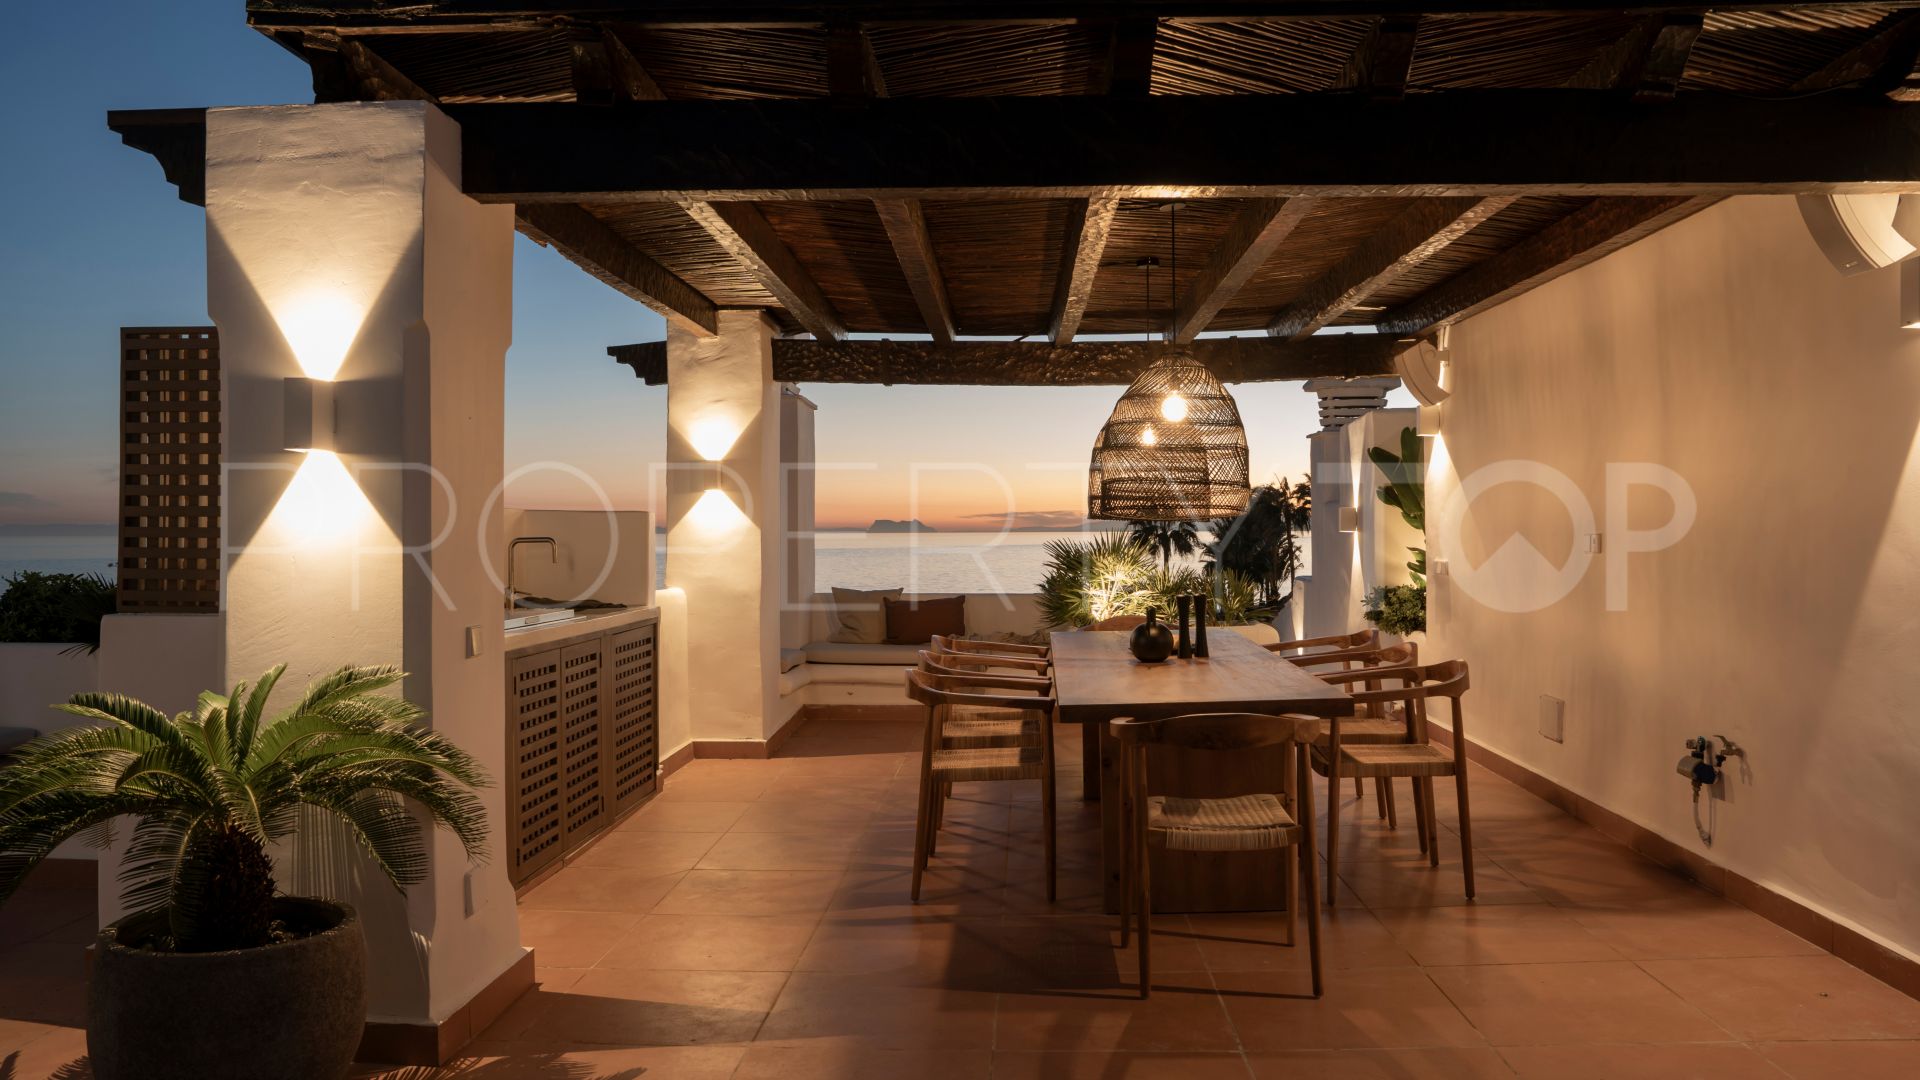 2 bedrooms Alcazaba Beach penthouse for sale